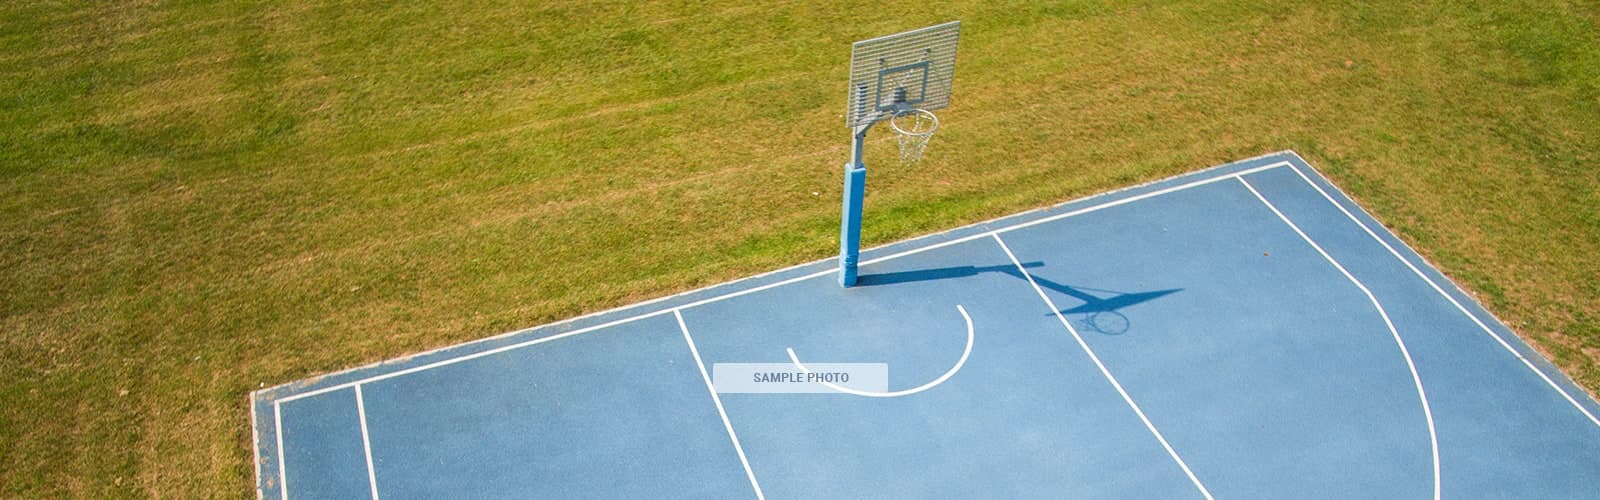 Fairlands Elementary School Blacktop / Basketball Courts in Pleasanton California